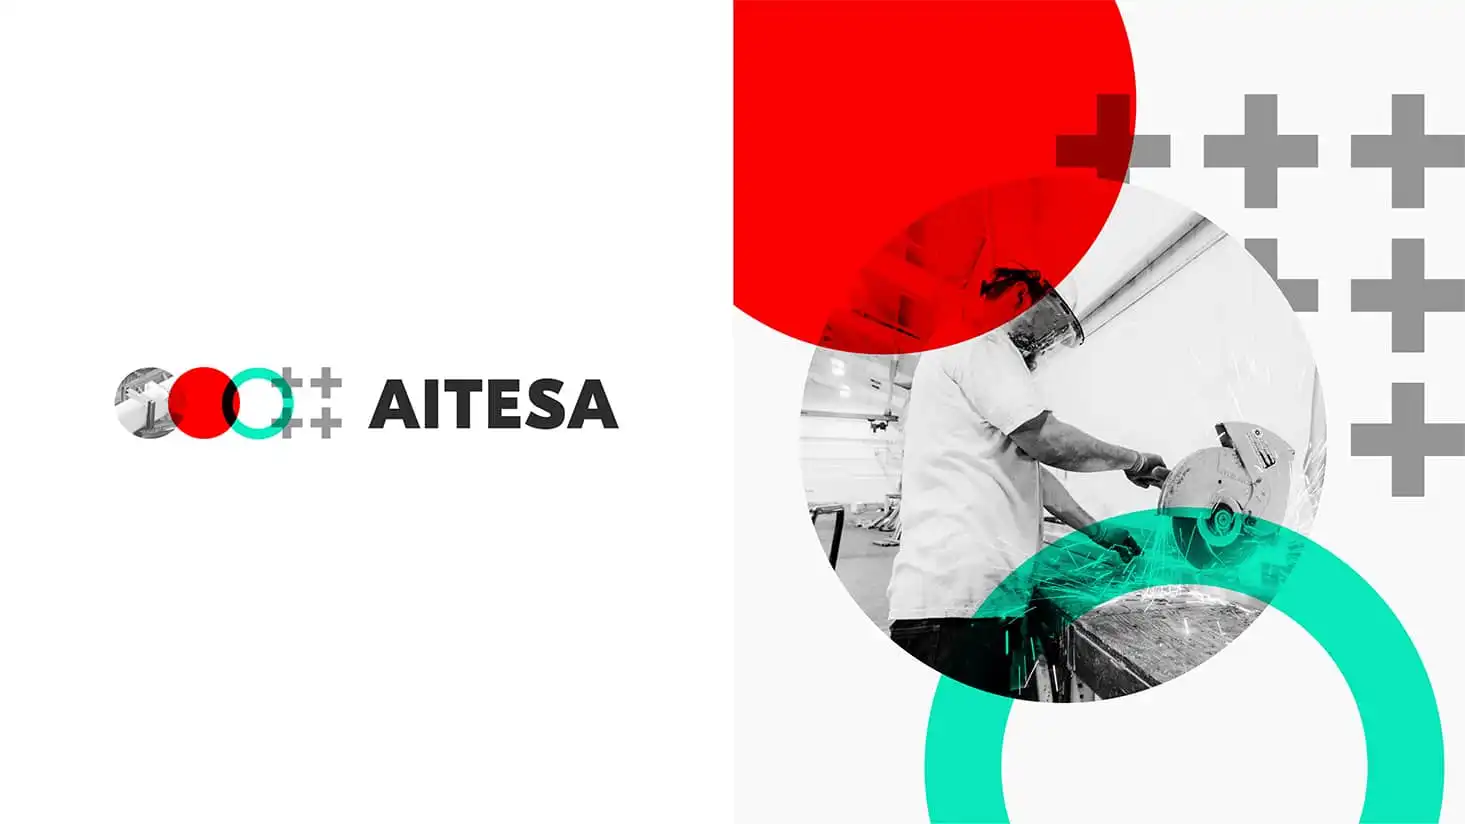 Sub-brand Aitesa's logo & graphic universe